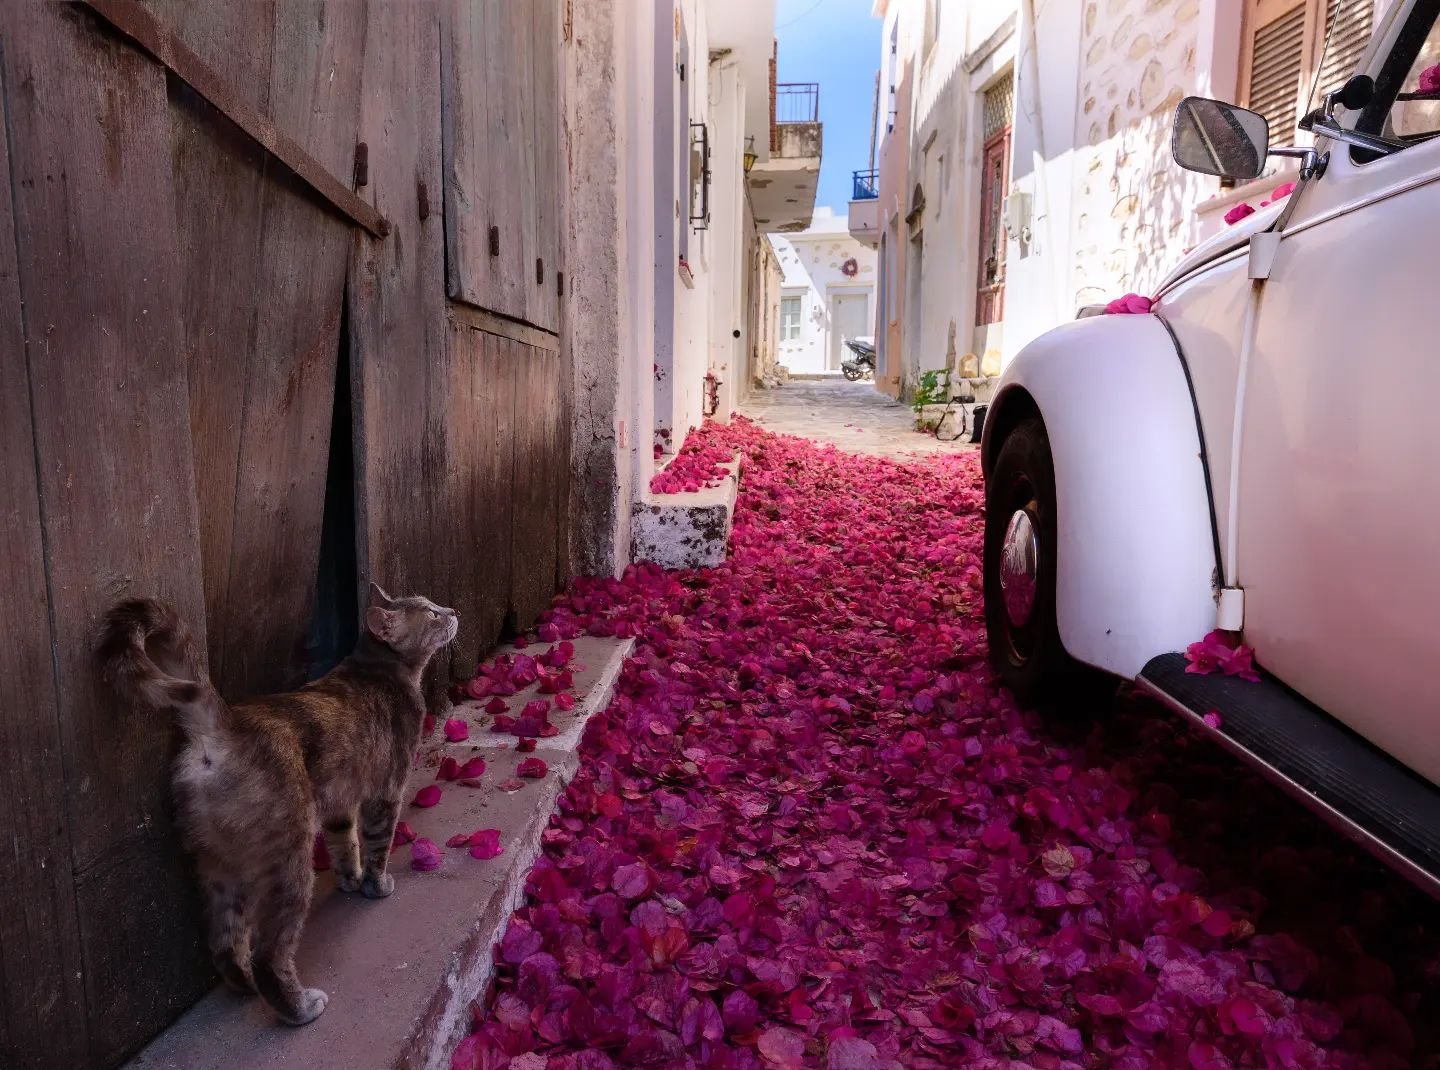 That surreal moment almost seemed too pretty to be true !

#2017 #parosisland #greektravel #greekislands #catinstagram  #travelphotography #travelphotographer #straycat #pink